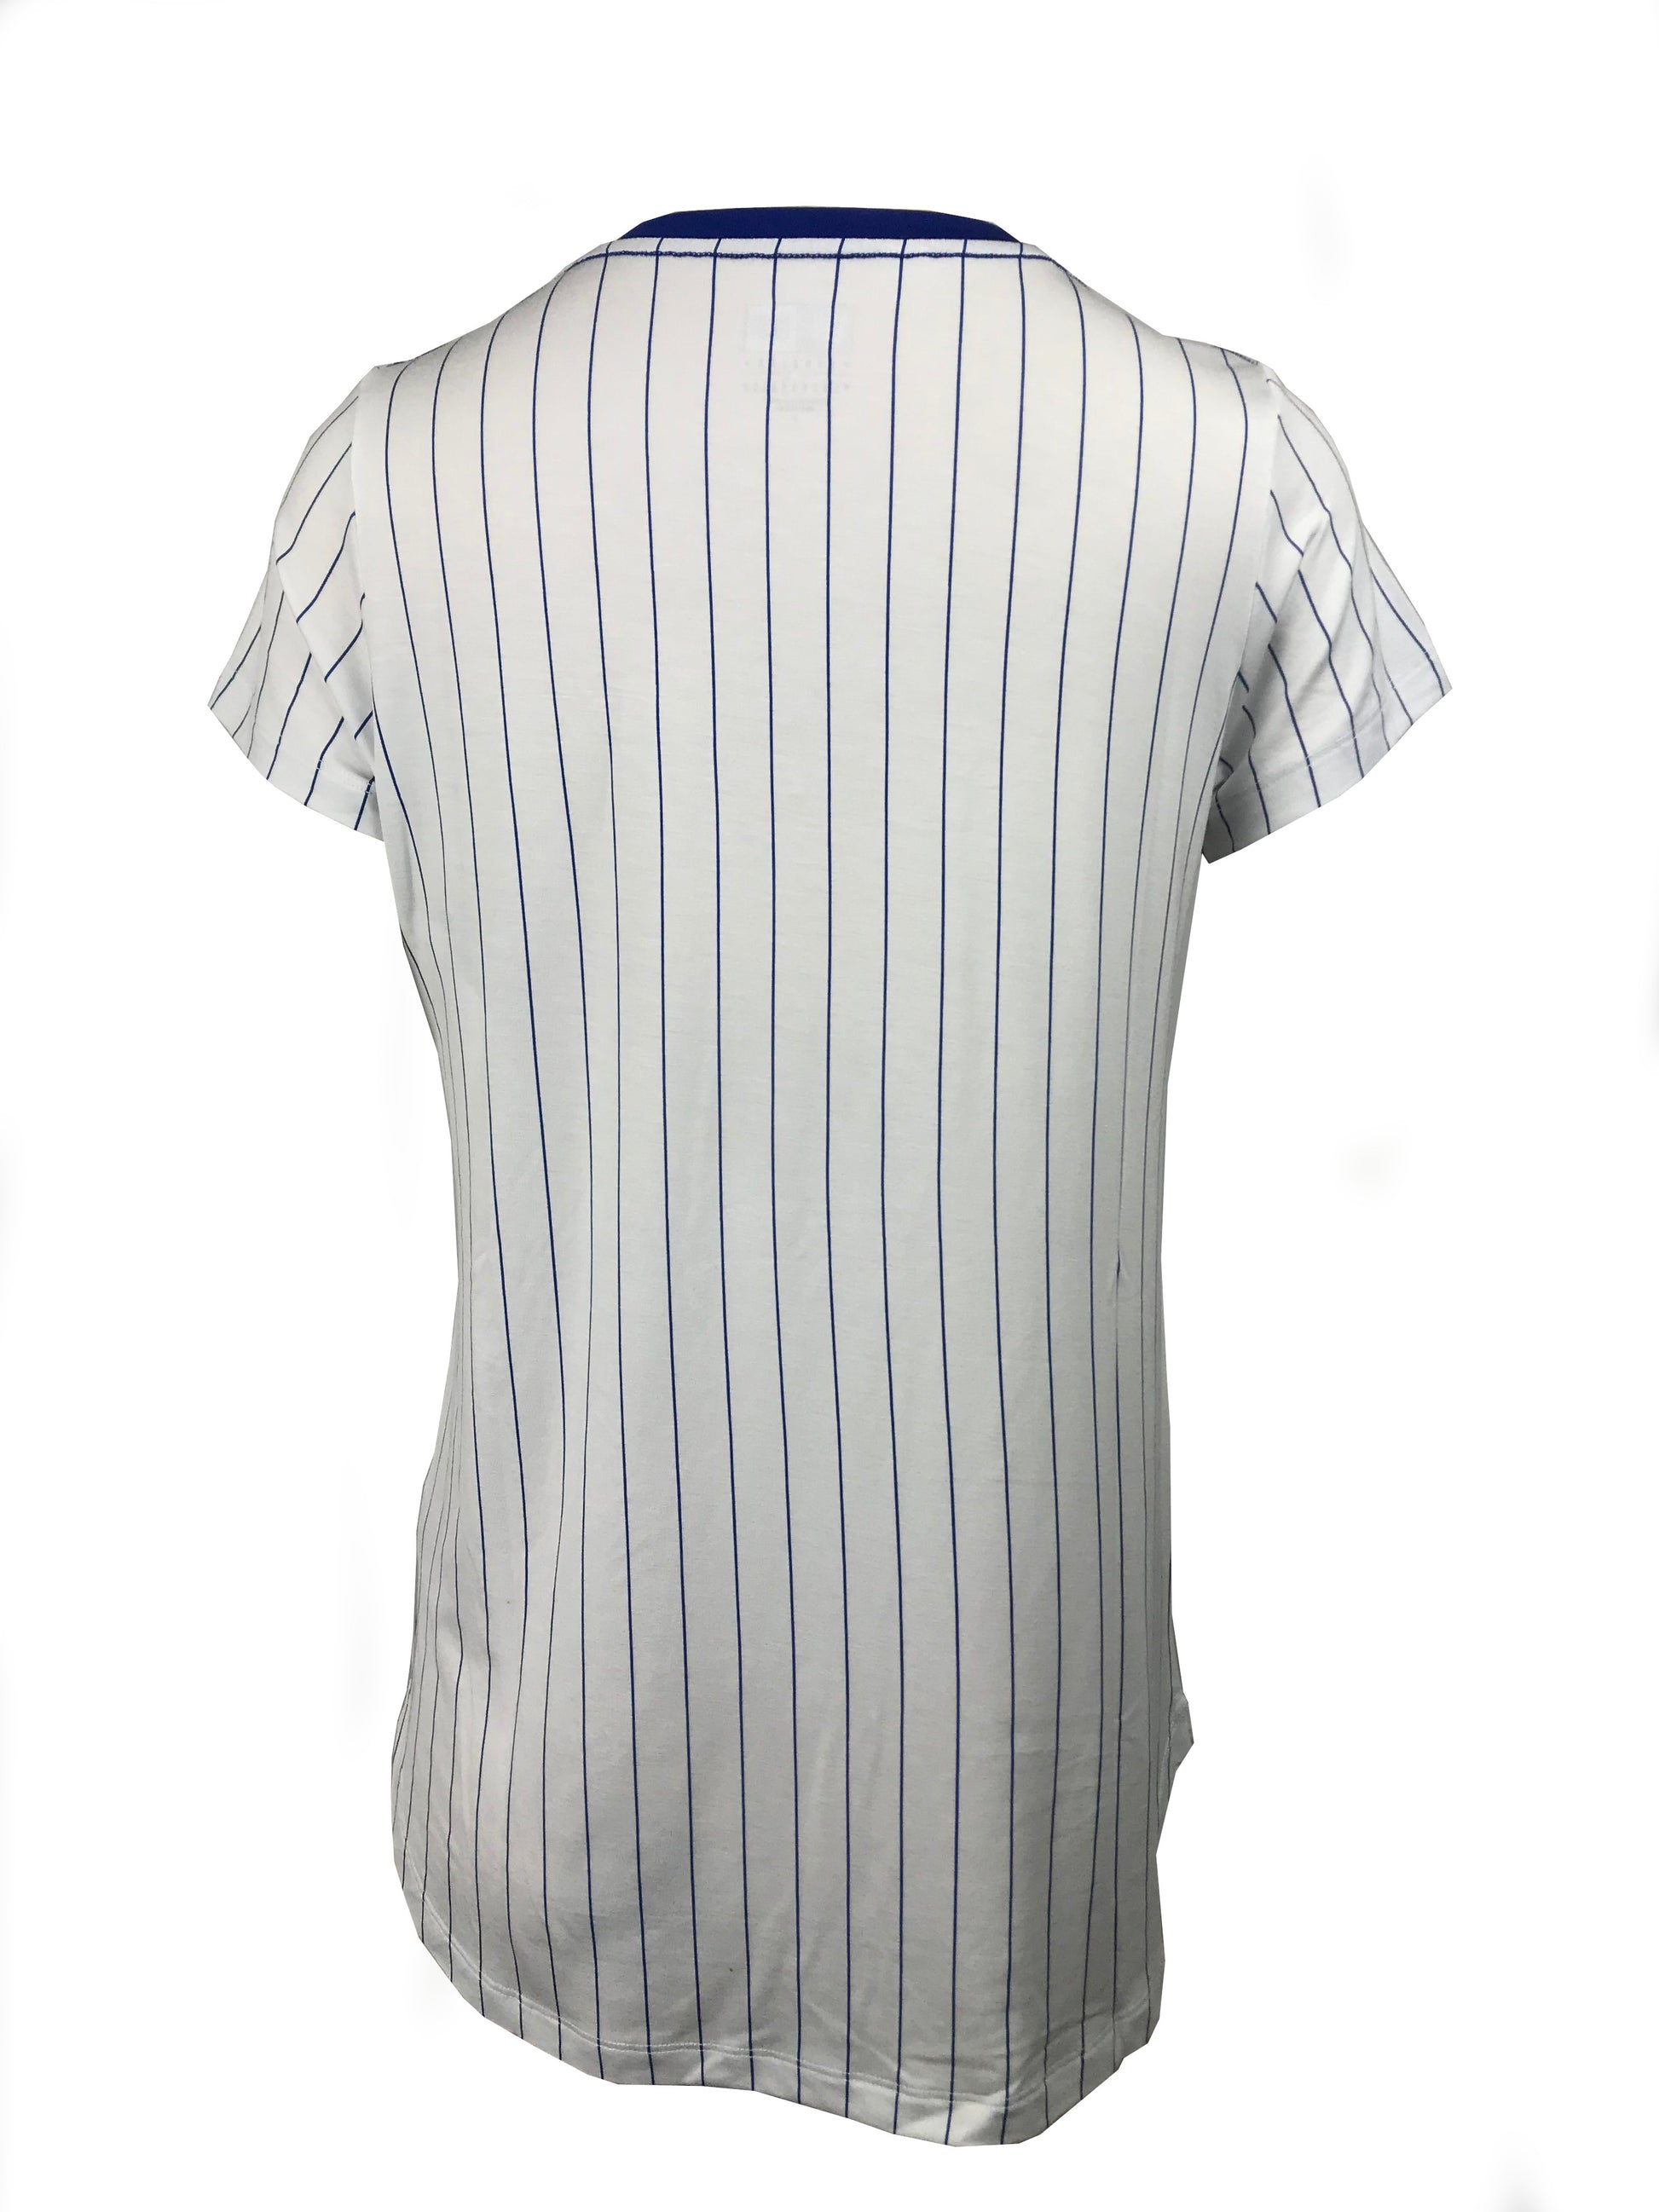 FIFTH&OCEAN Los Angeles Dodgers Women's Stripe Neck T-Shirt 20 / M